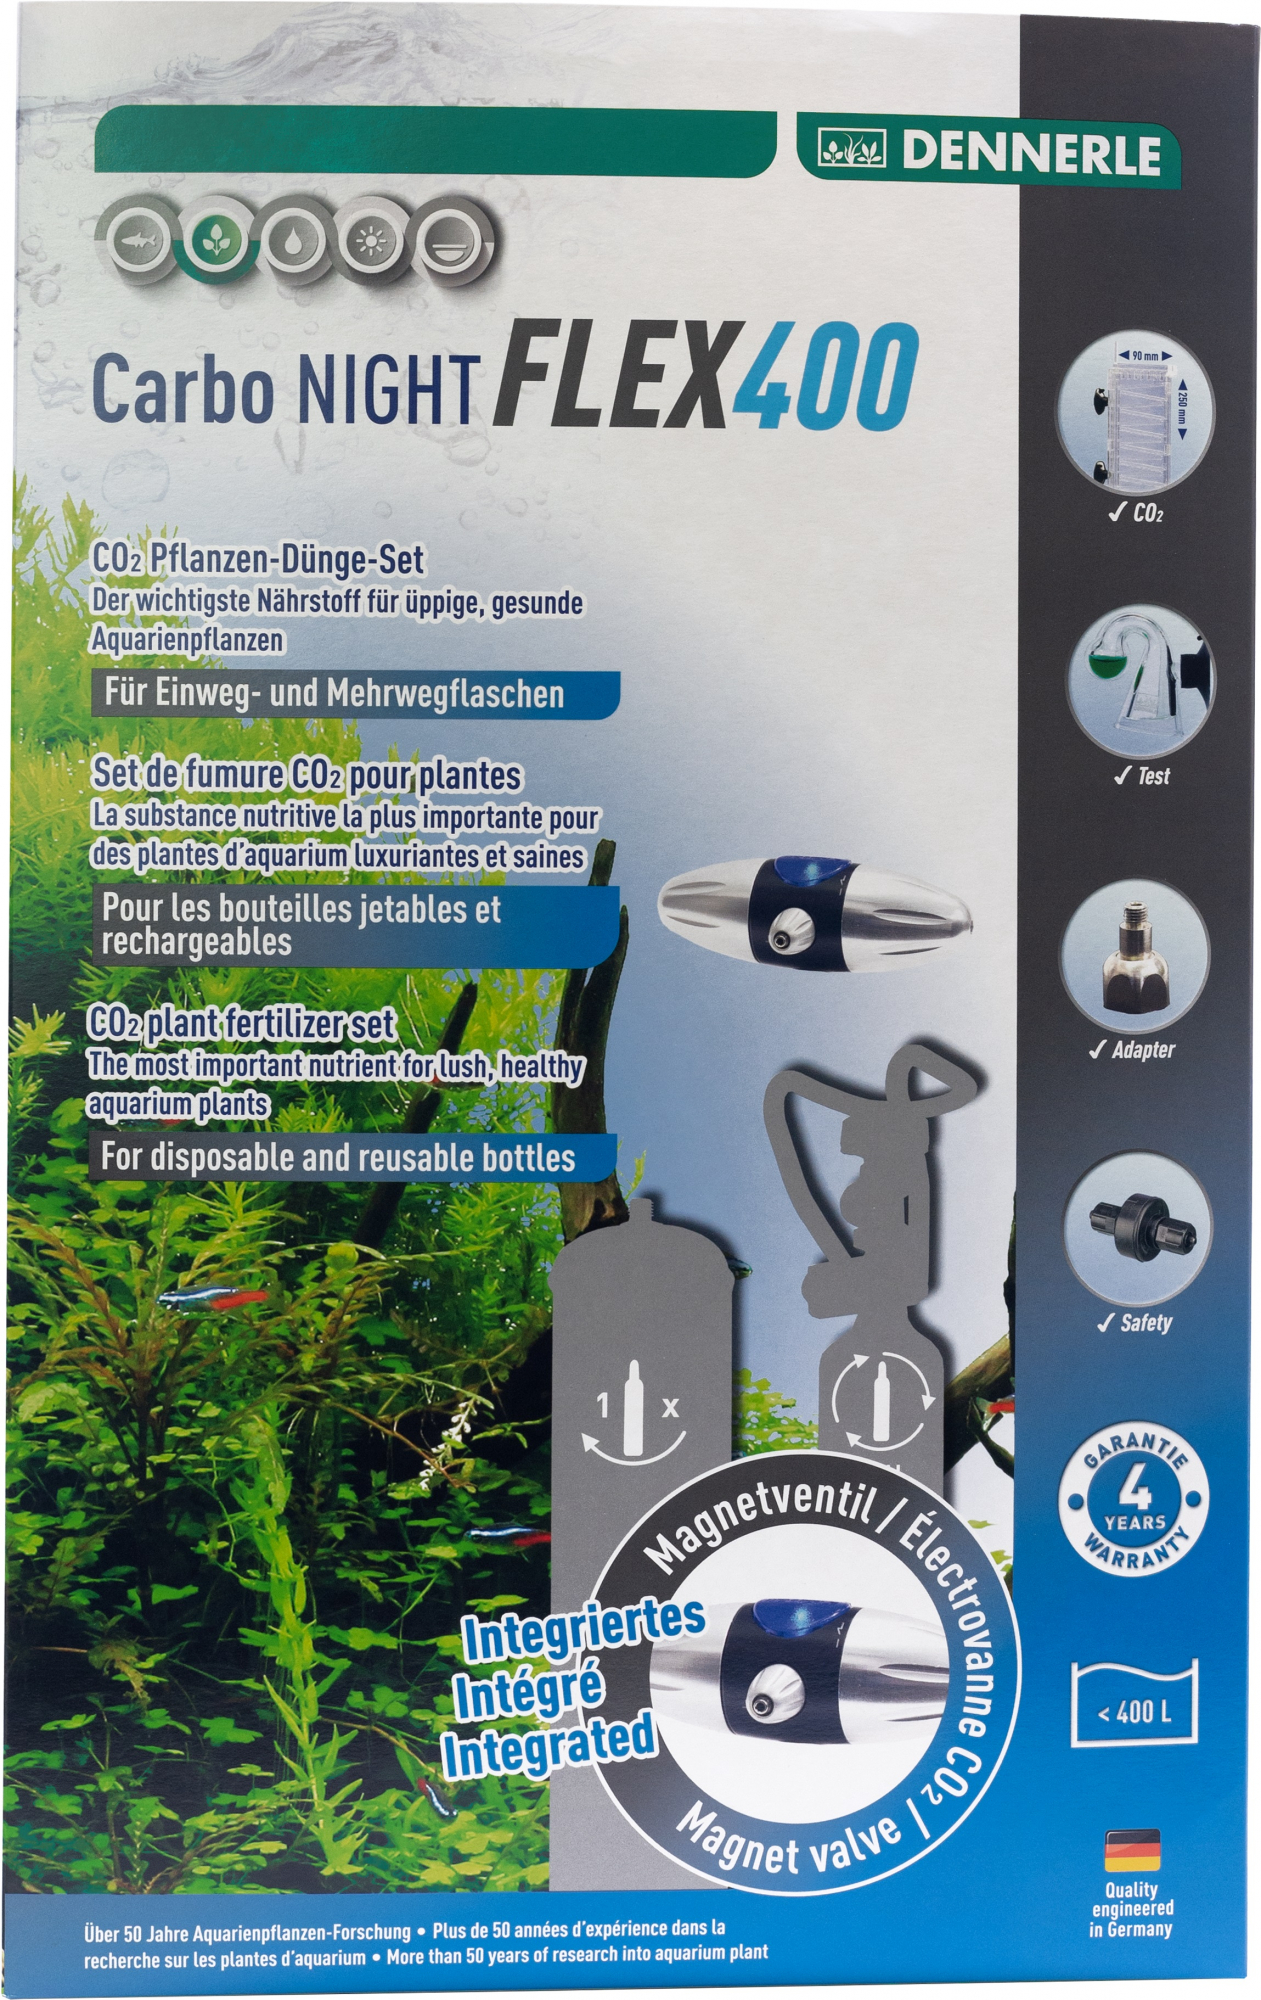 Dennerle Carbo Night Flex 400 CO2-Set